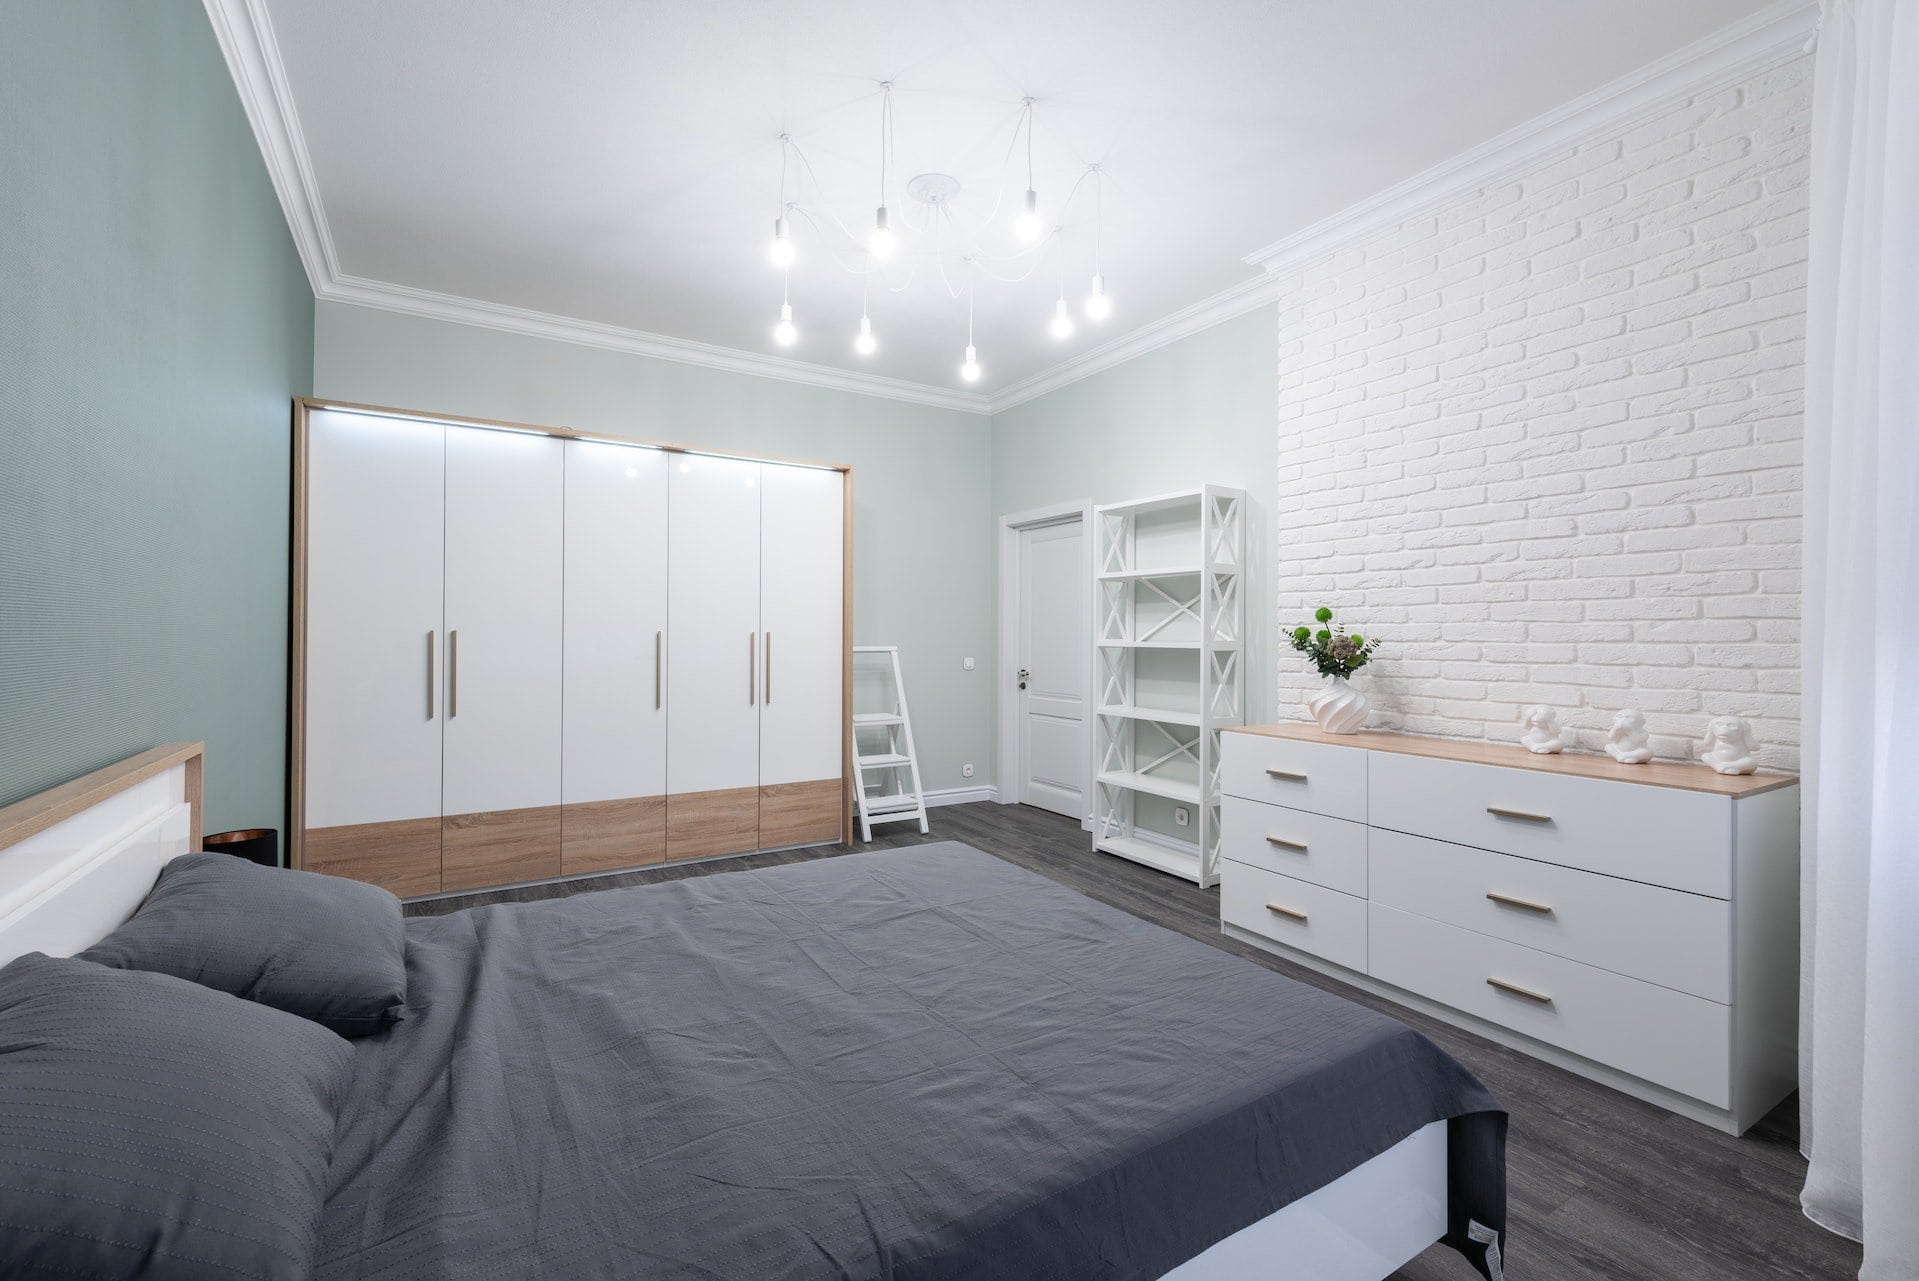  White bedroom